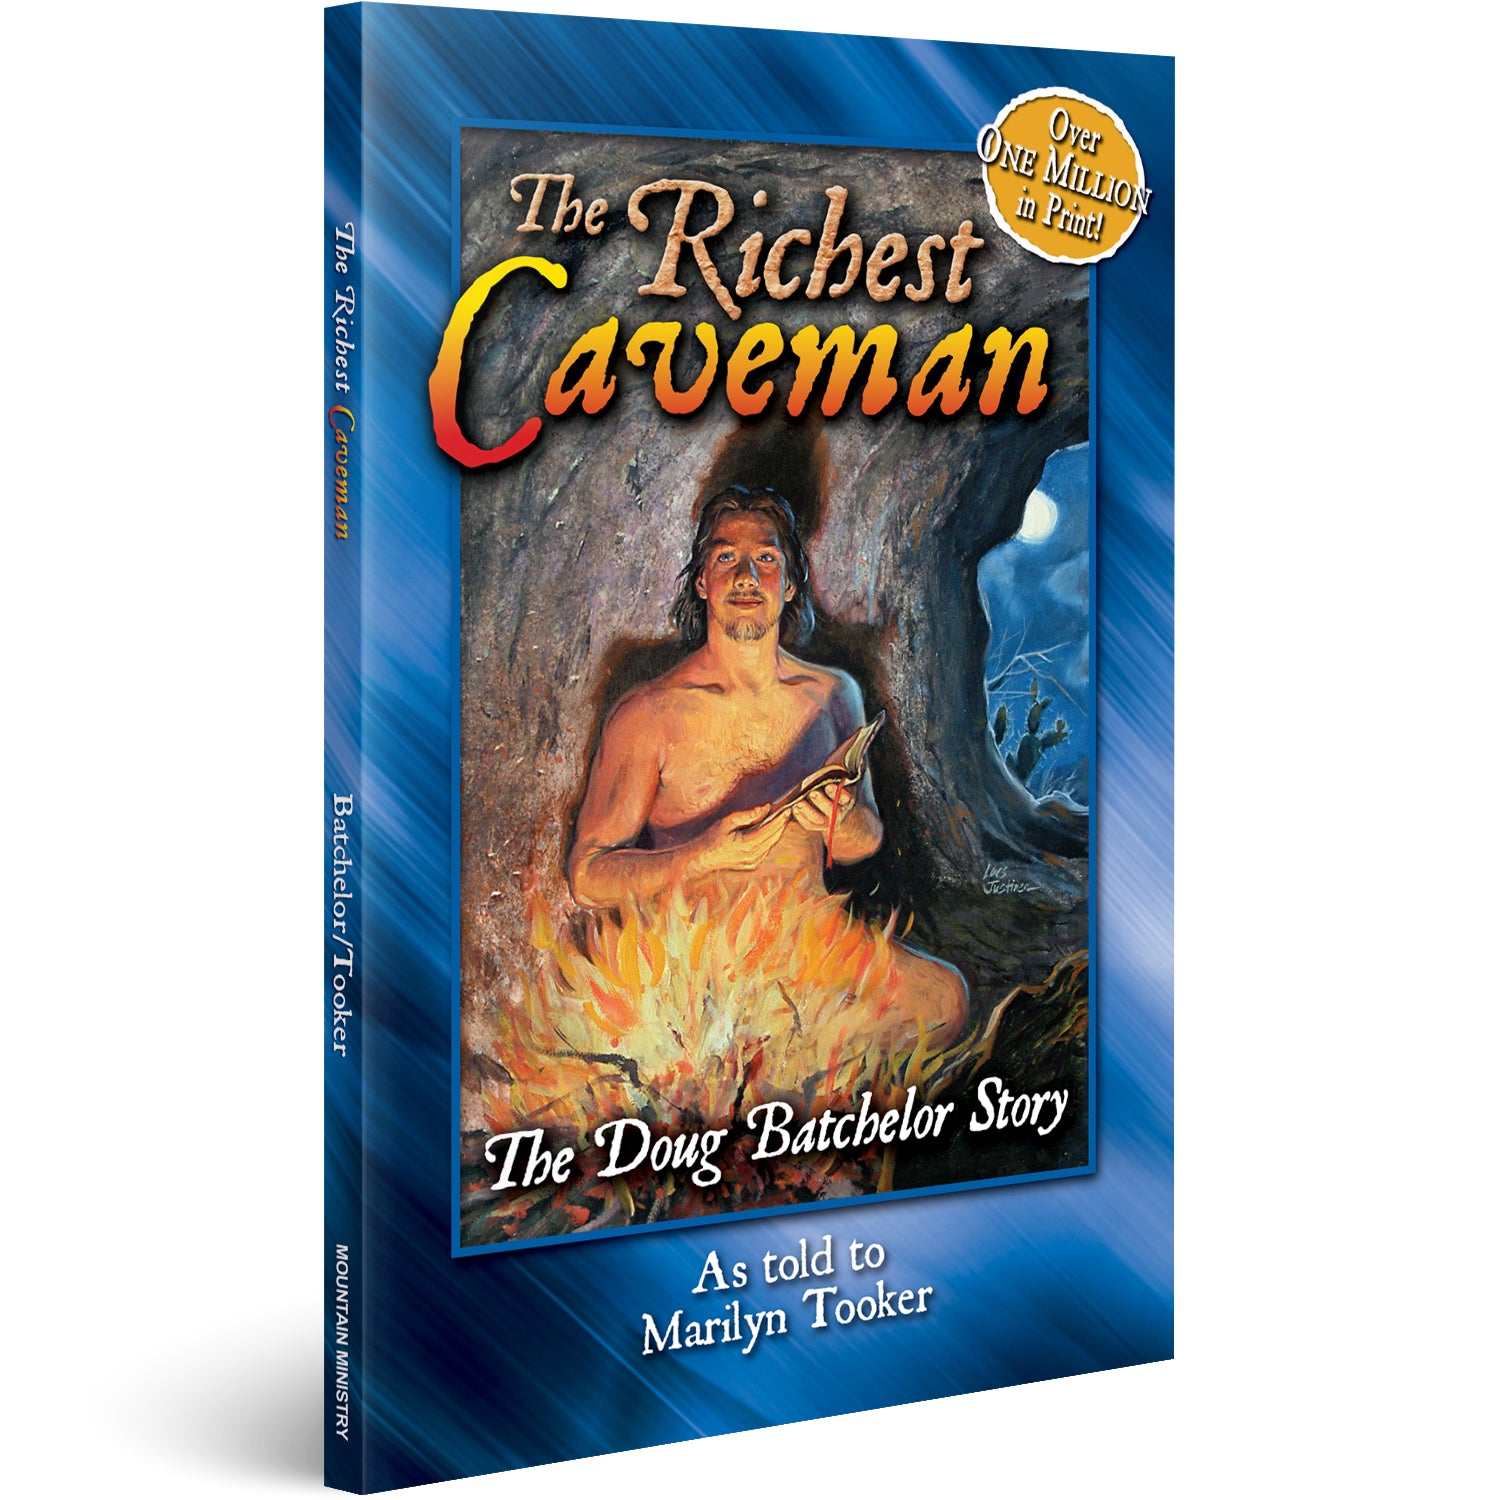 The Richest Caveman by Doug Batchelor